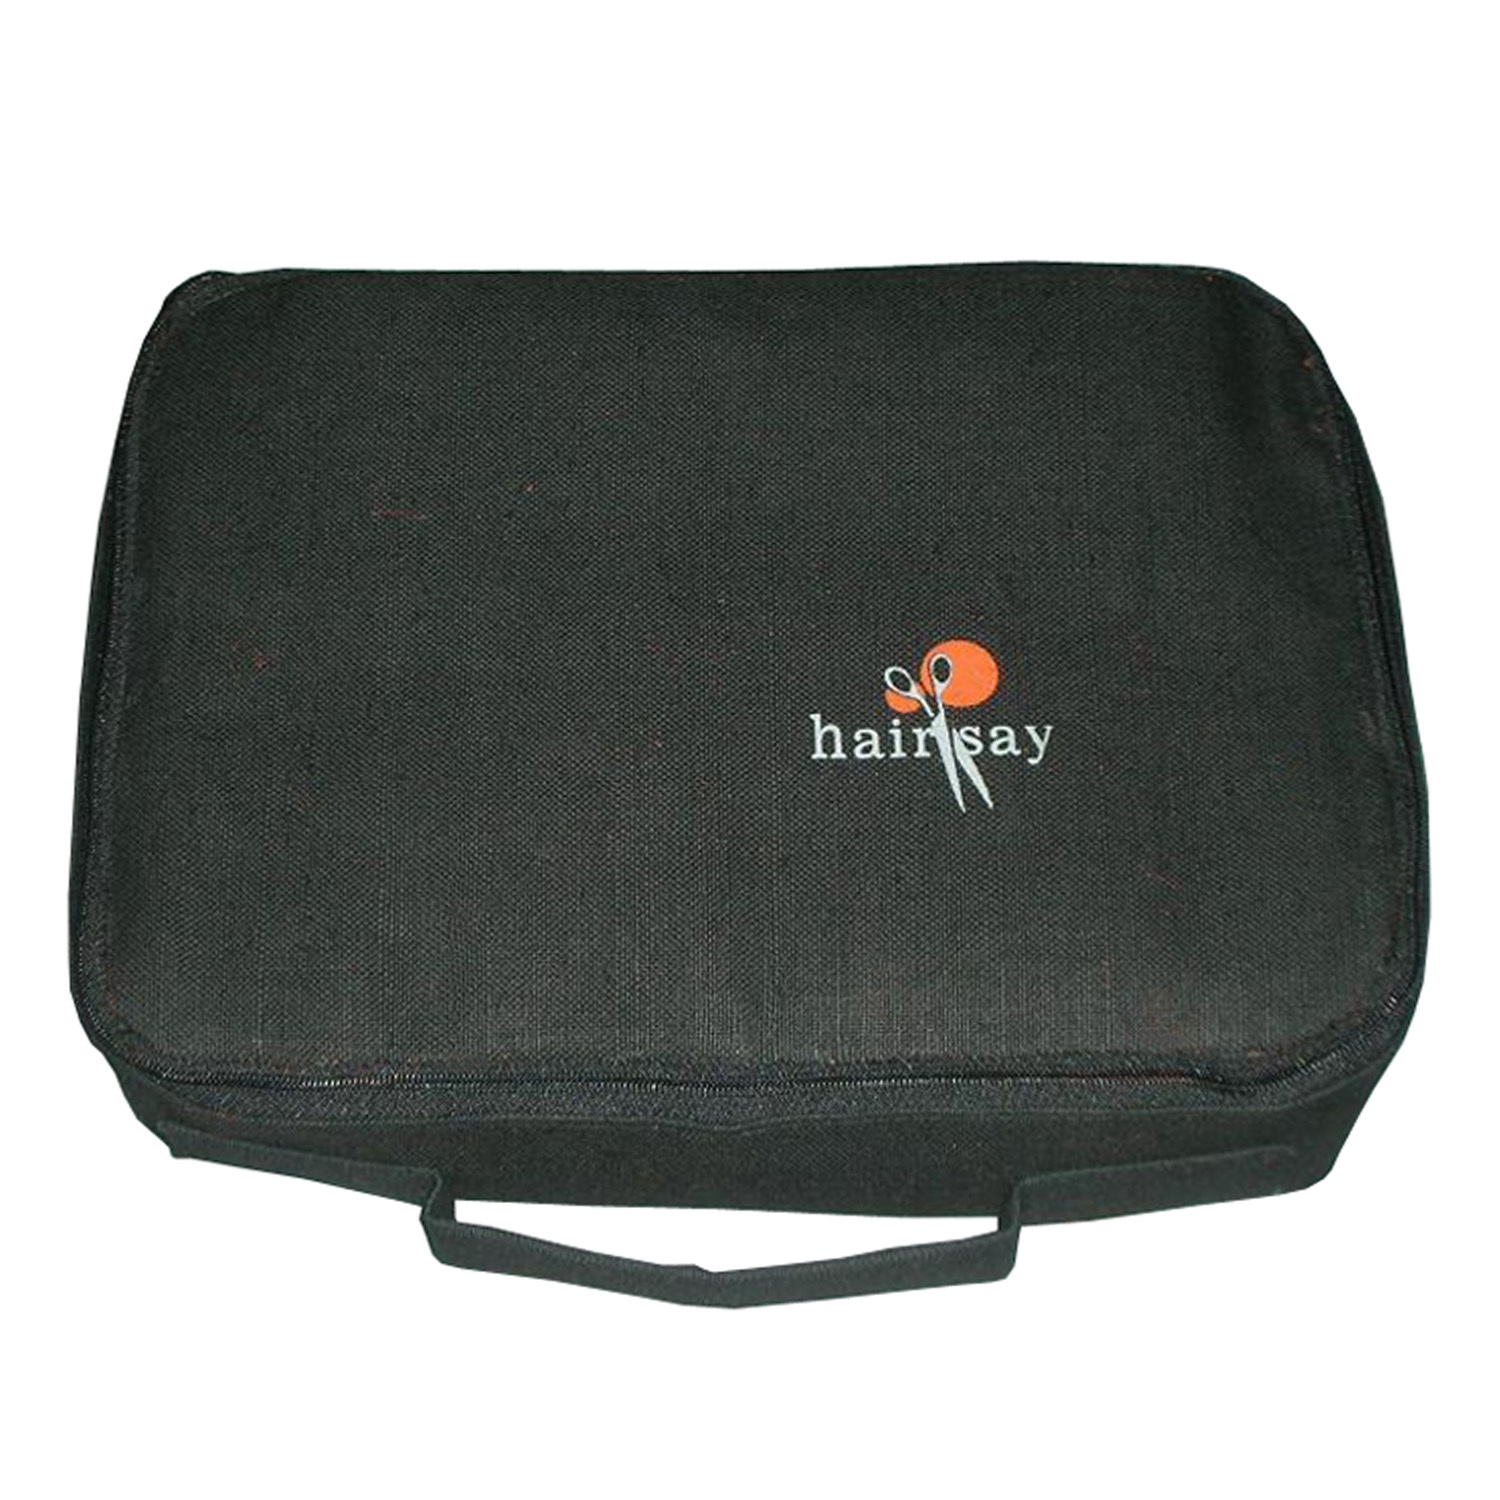 Travel Kit Bag With Polysilk Lining